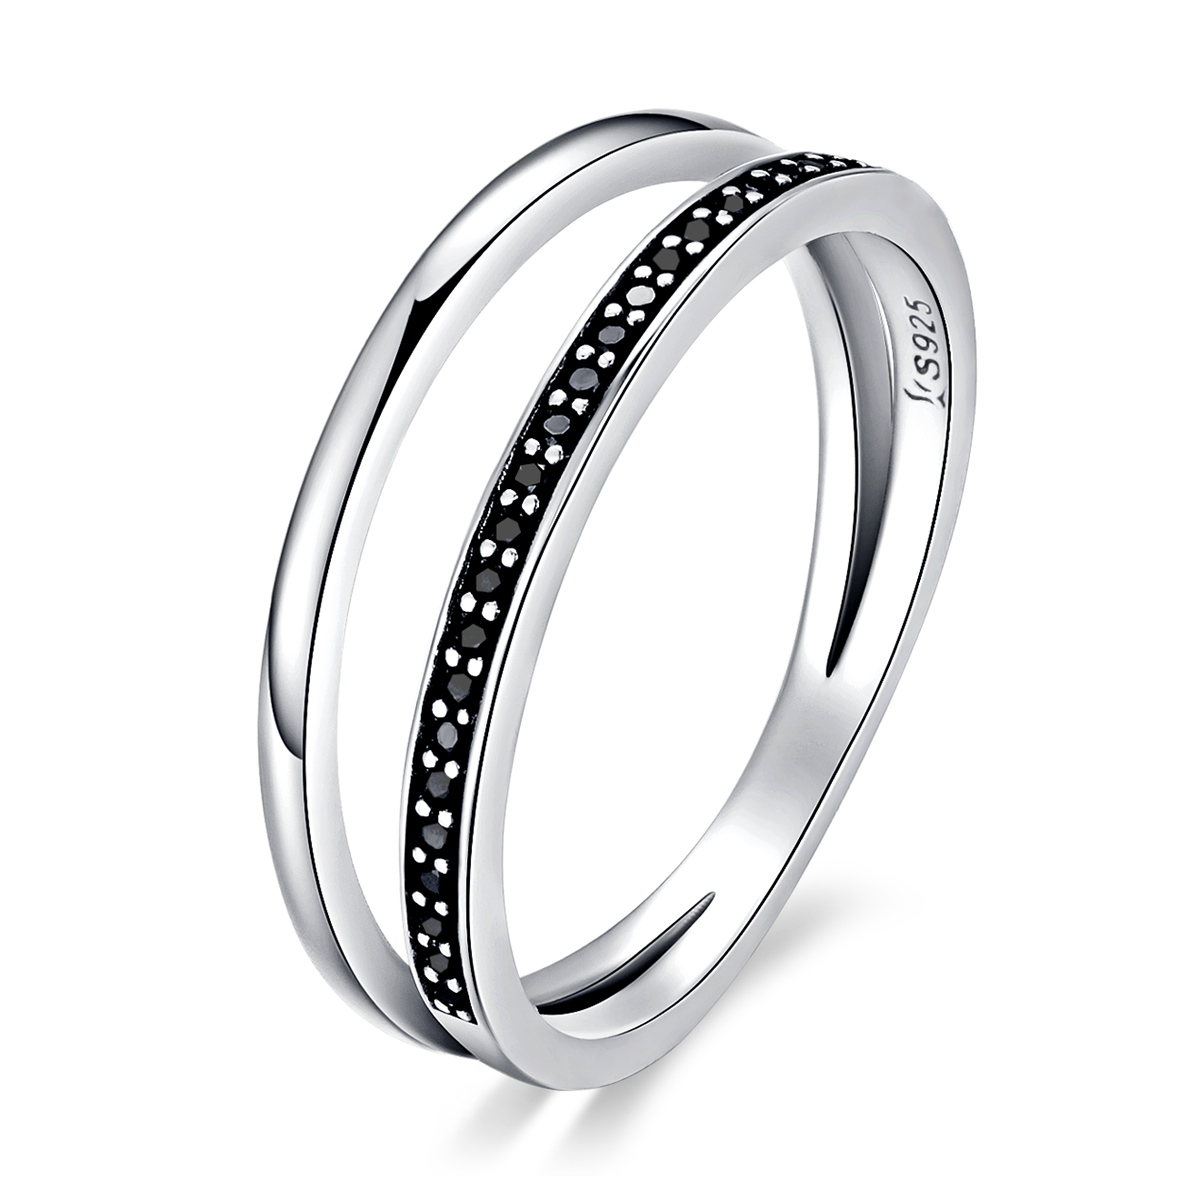 Y0154 Stříbrný dvojitý prsten se zirkony ČERNÝ Velikost: 8 (EU: 56,5 - 58,5)